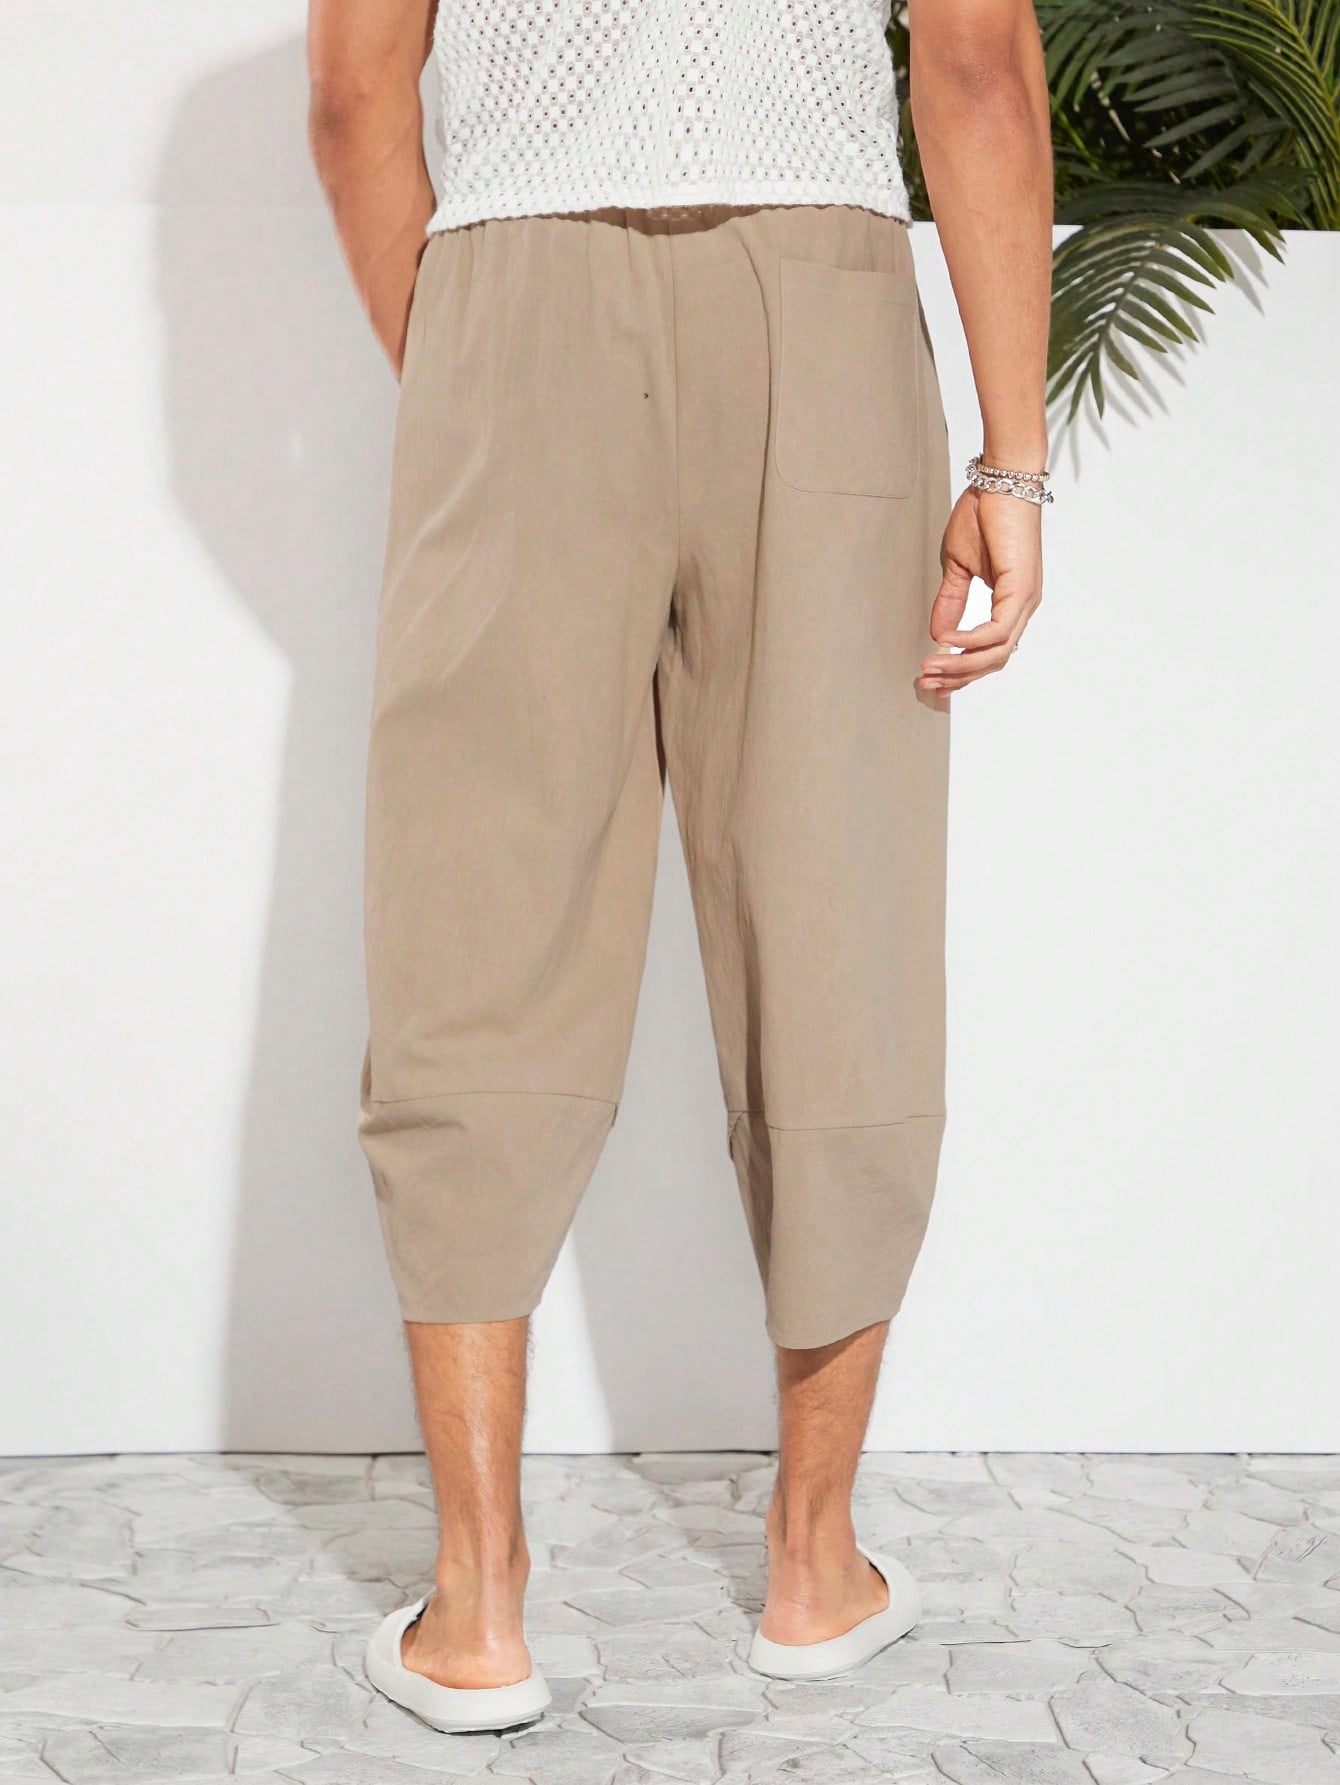 Capri Pants – Covered In Modesty